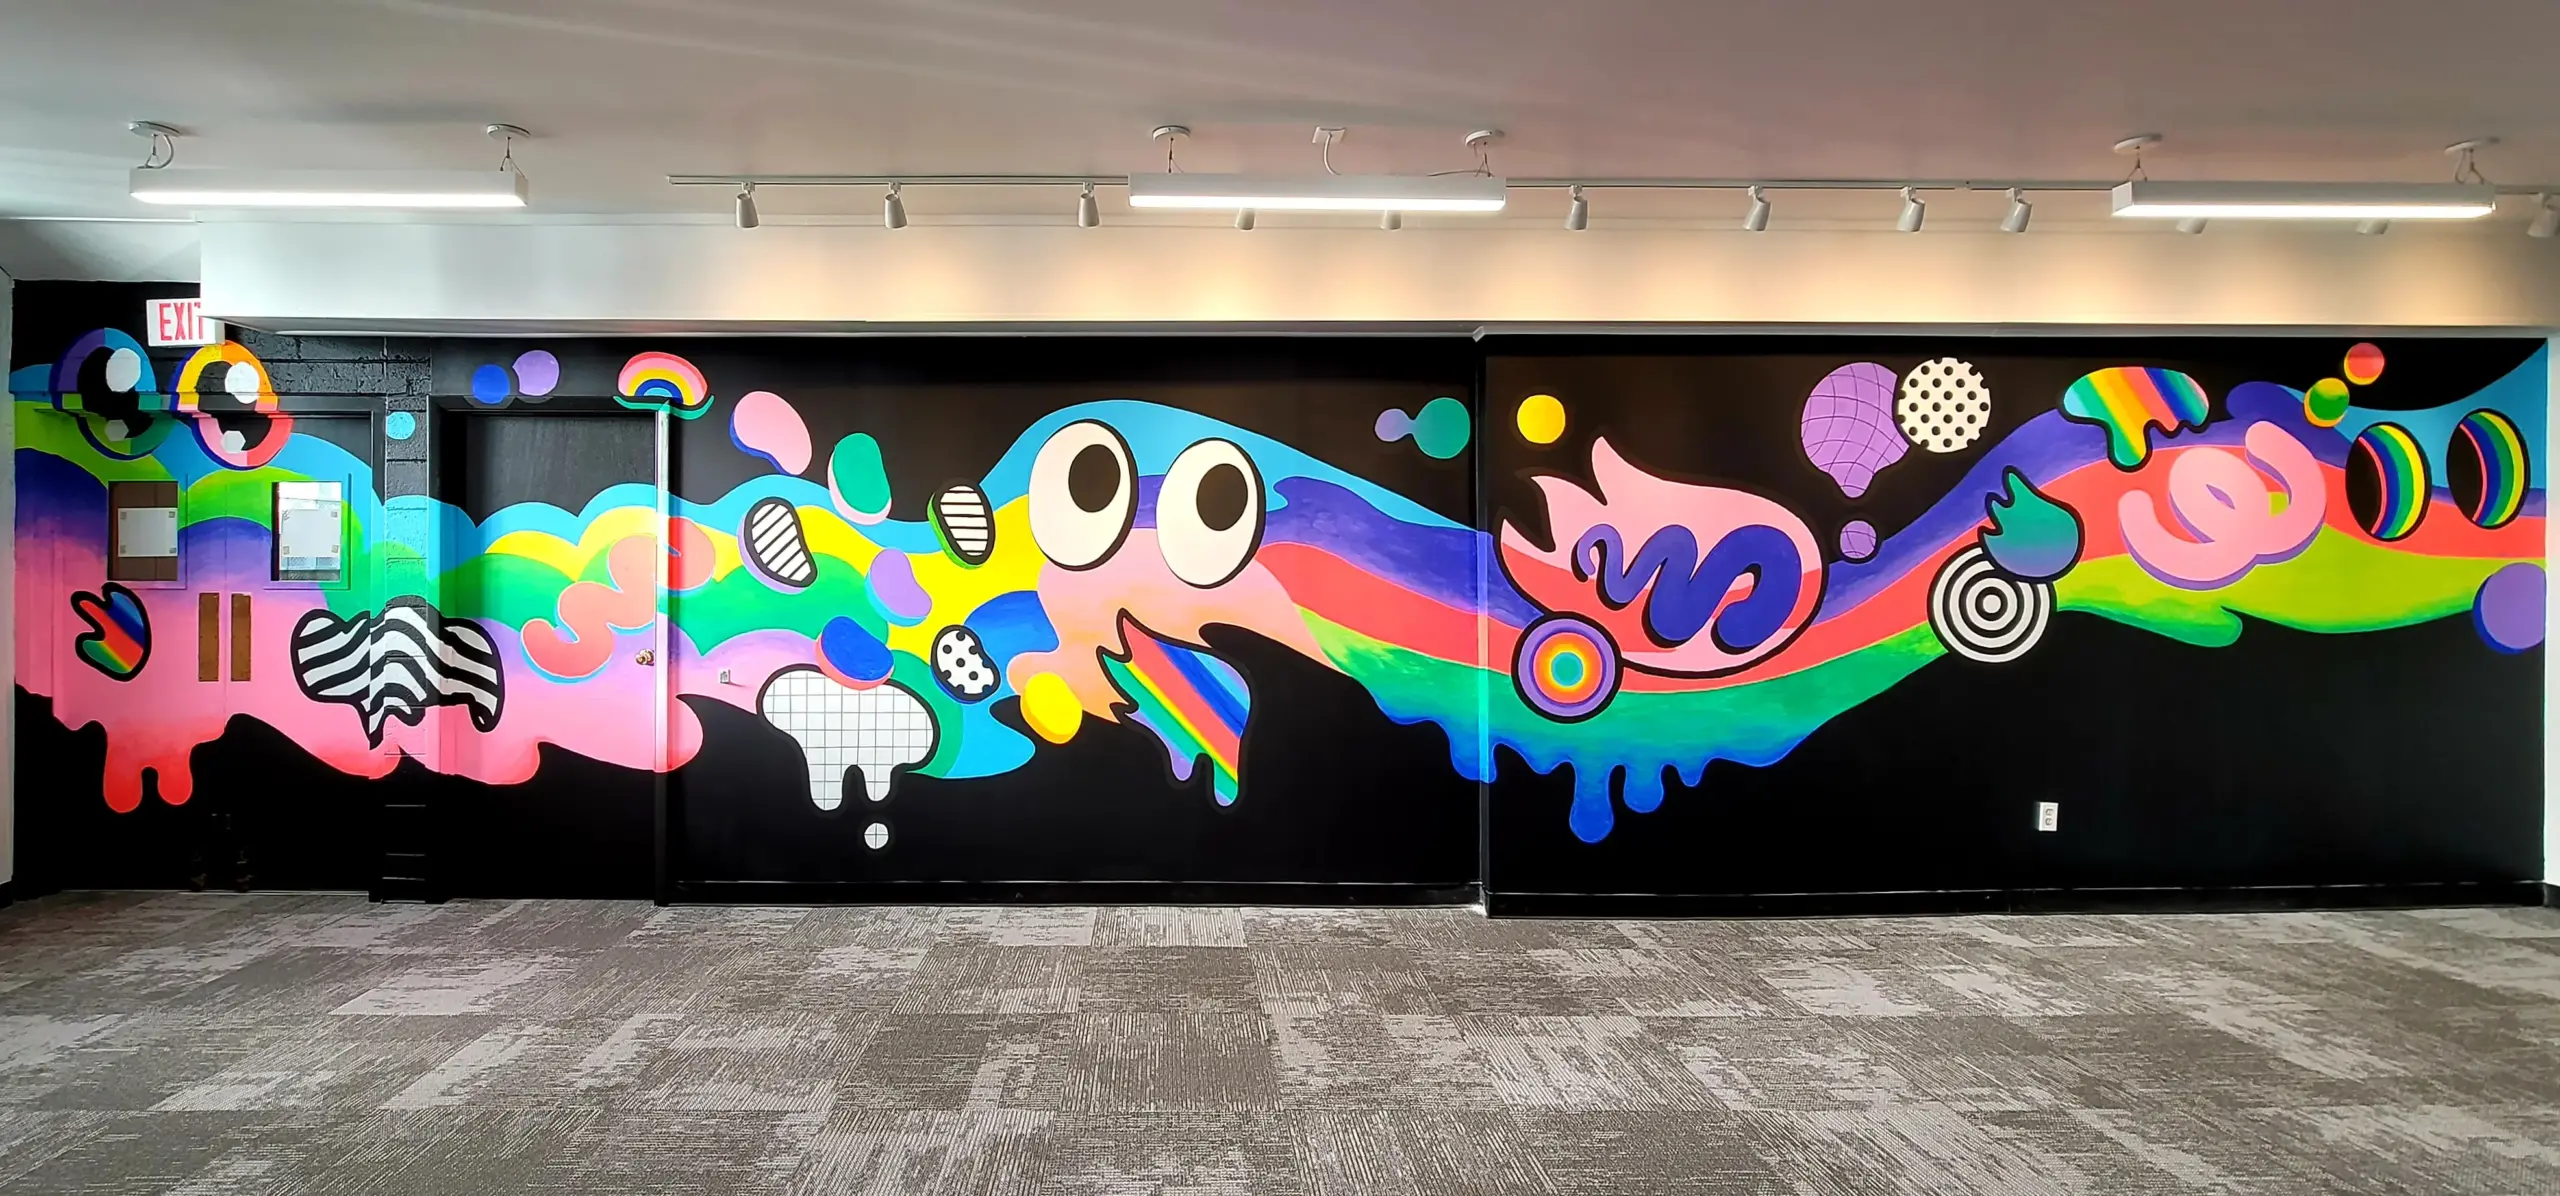 Brightly coloured cartoon art mural on a black interior wall